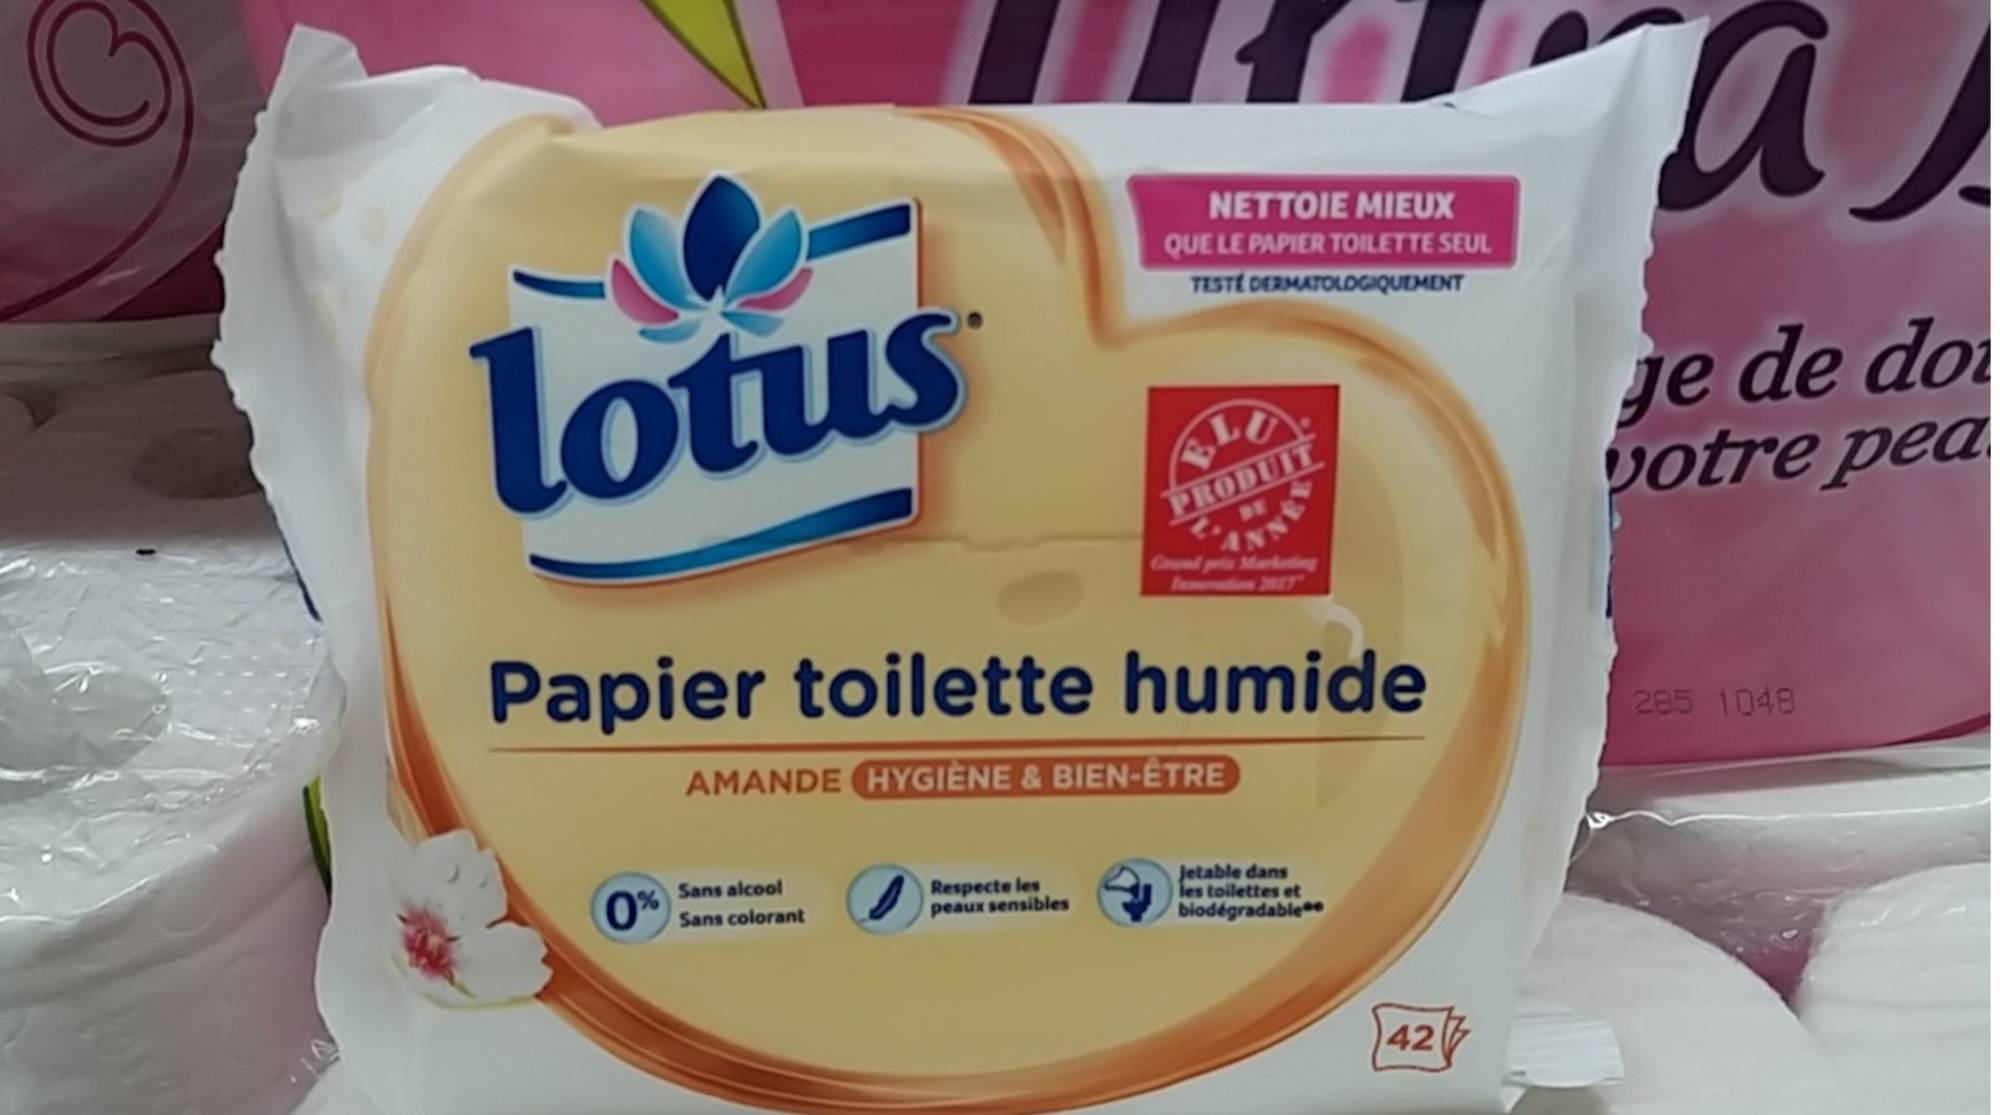 Cocotte forever: Test TRND papier toilette humide Lotus